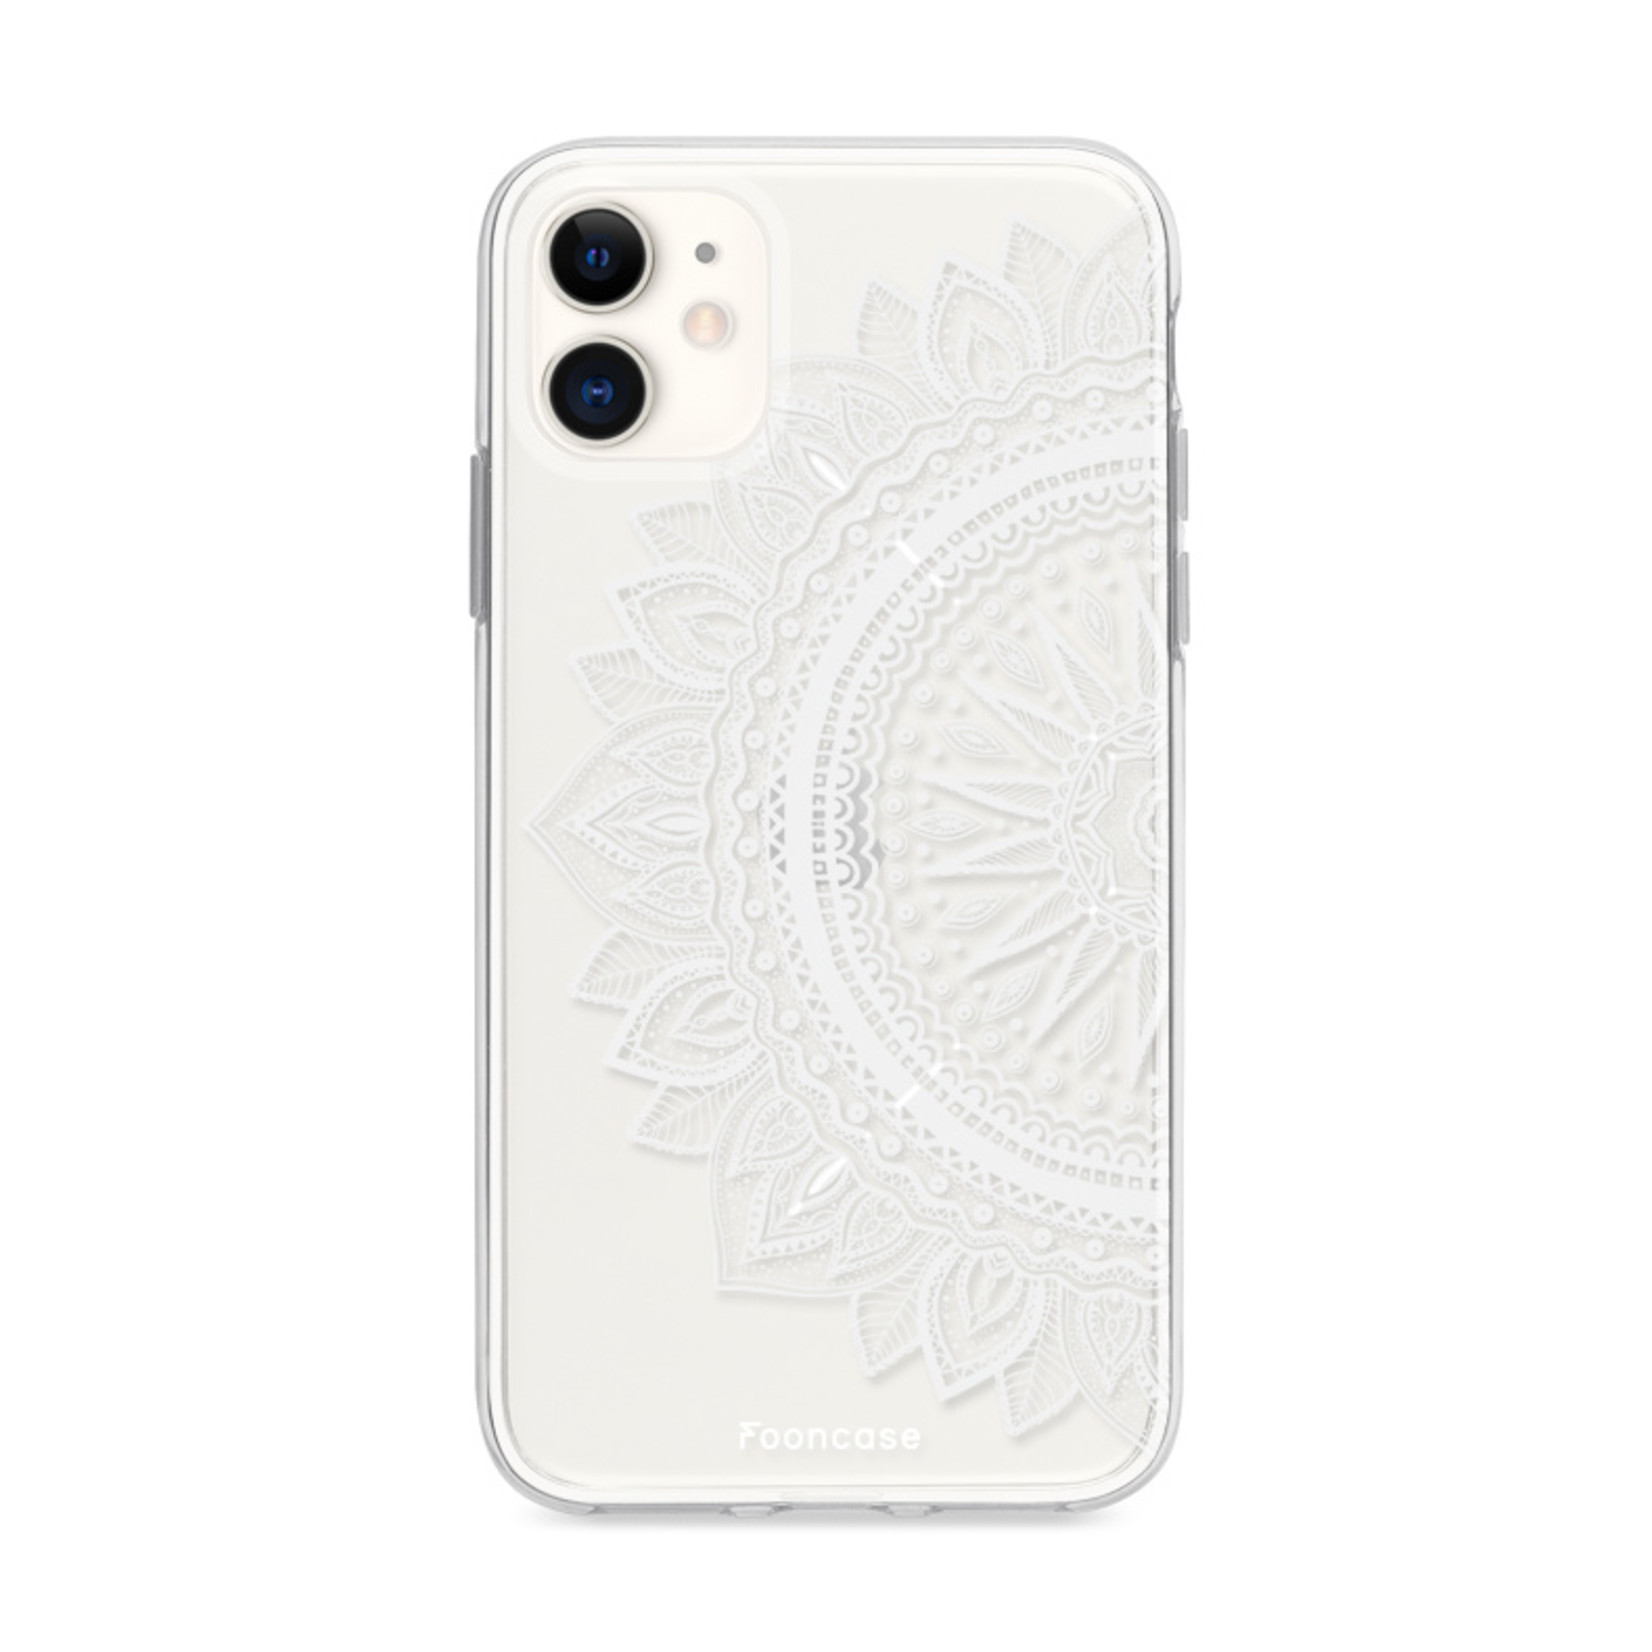 FOONCASE Iphone 12 Cover - Mandala